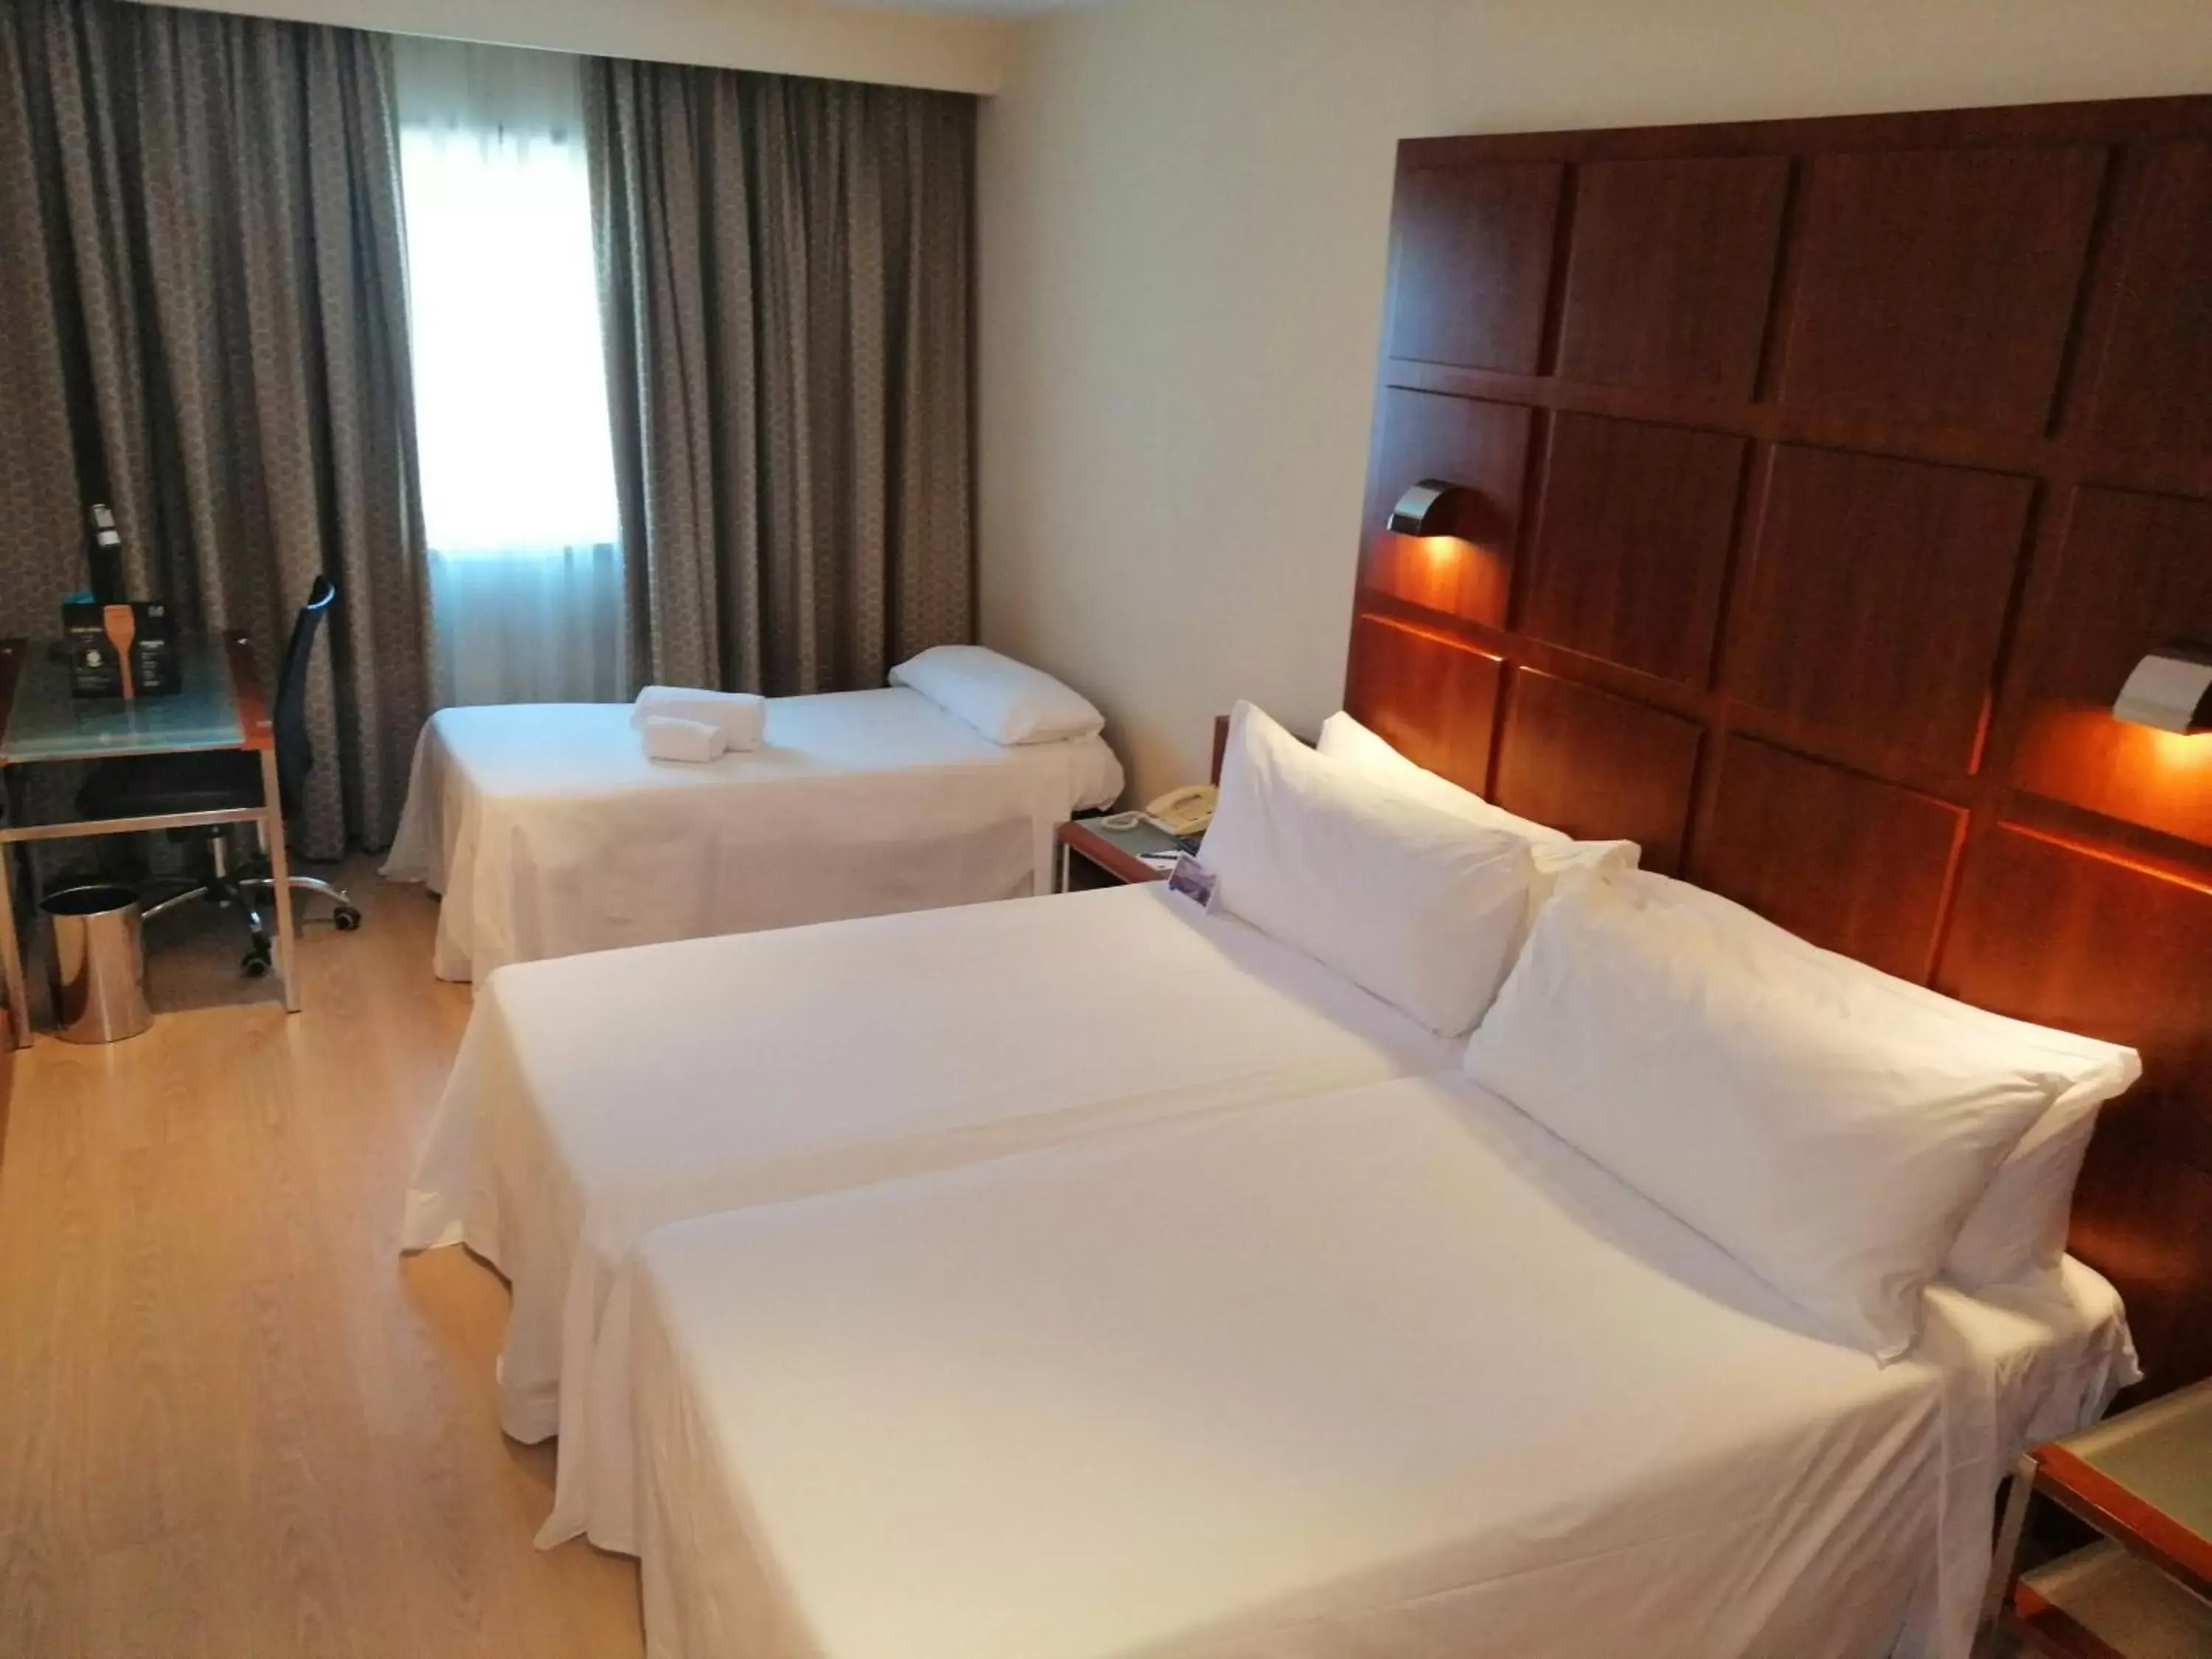 Photo of the whole room, Bed in Port Azafata Valencia